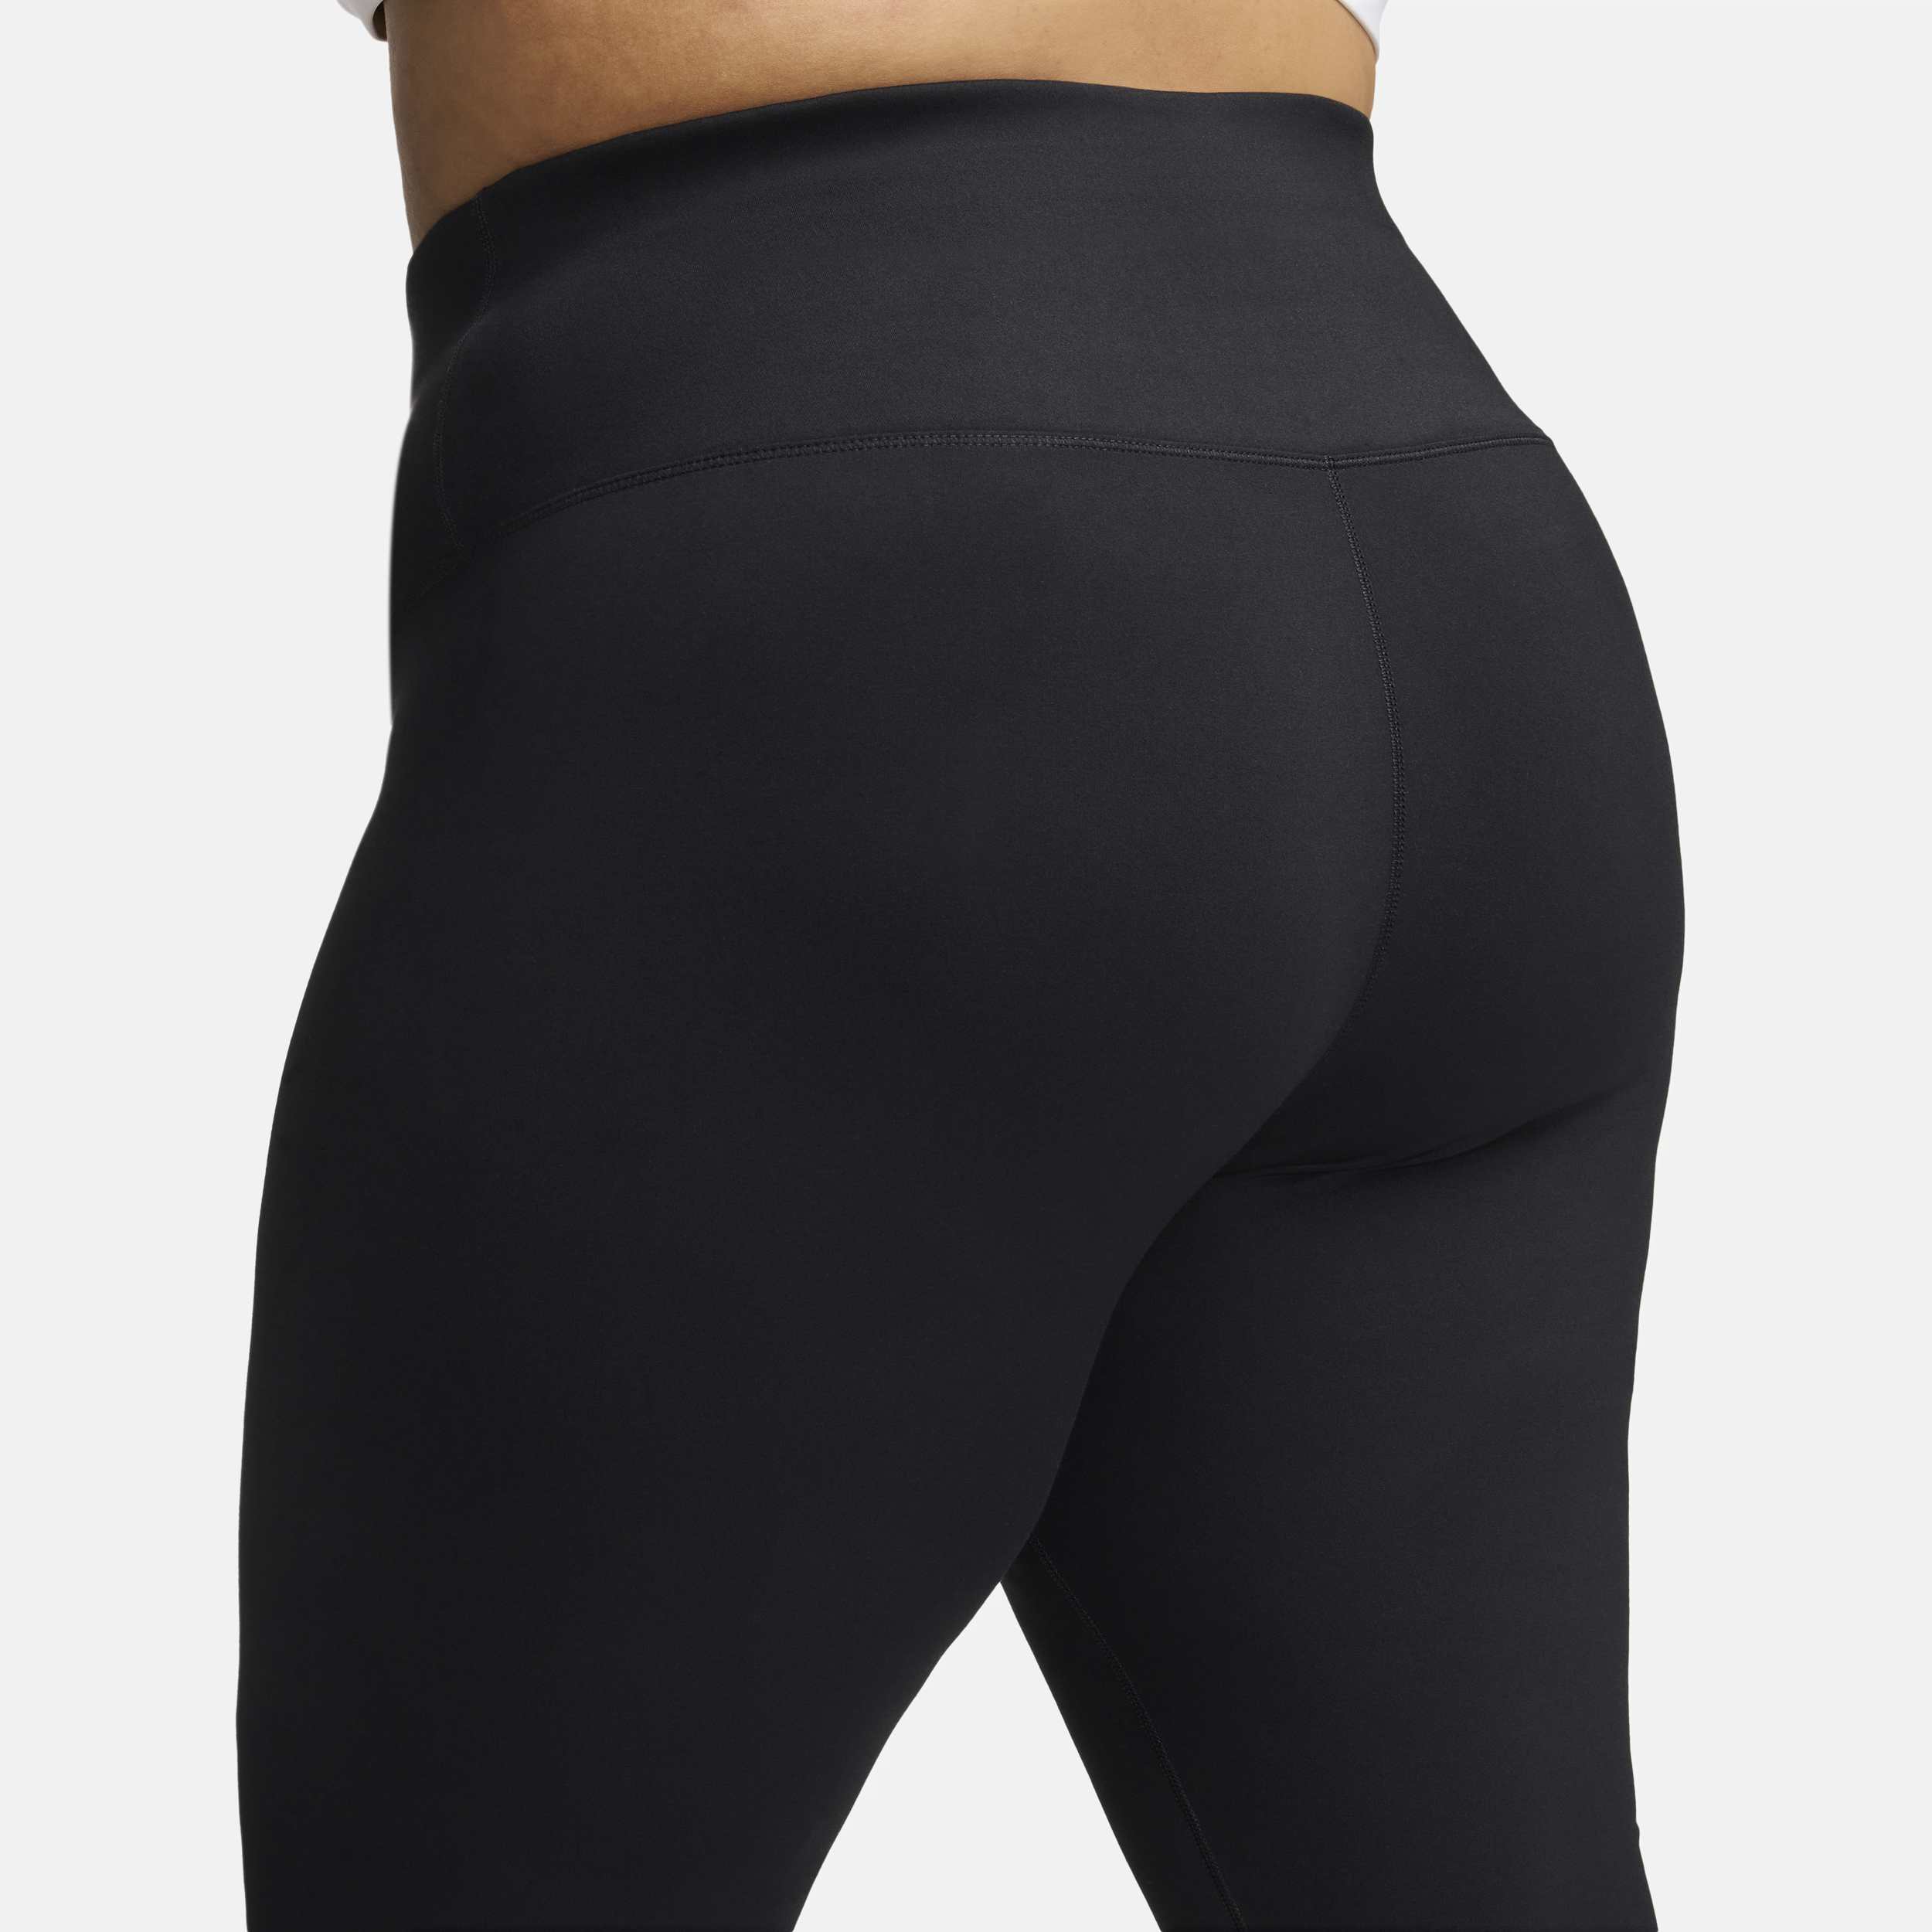 Nike One lange legging met hoge taille voor dames (Plus Size) Zwart